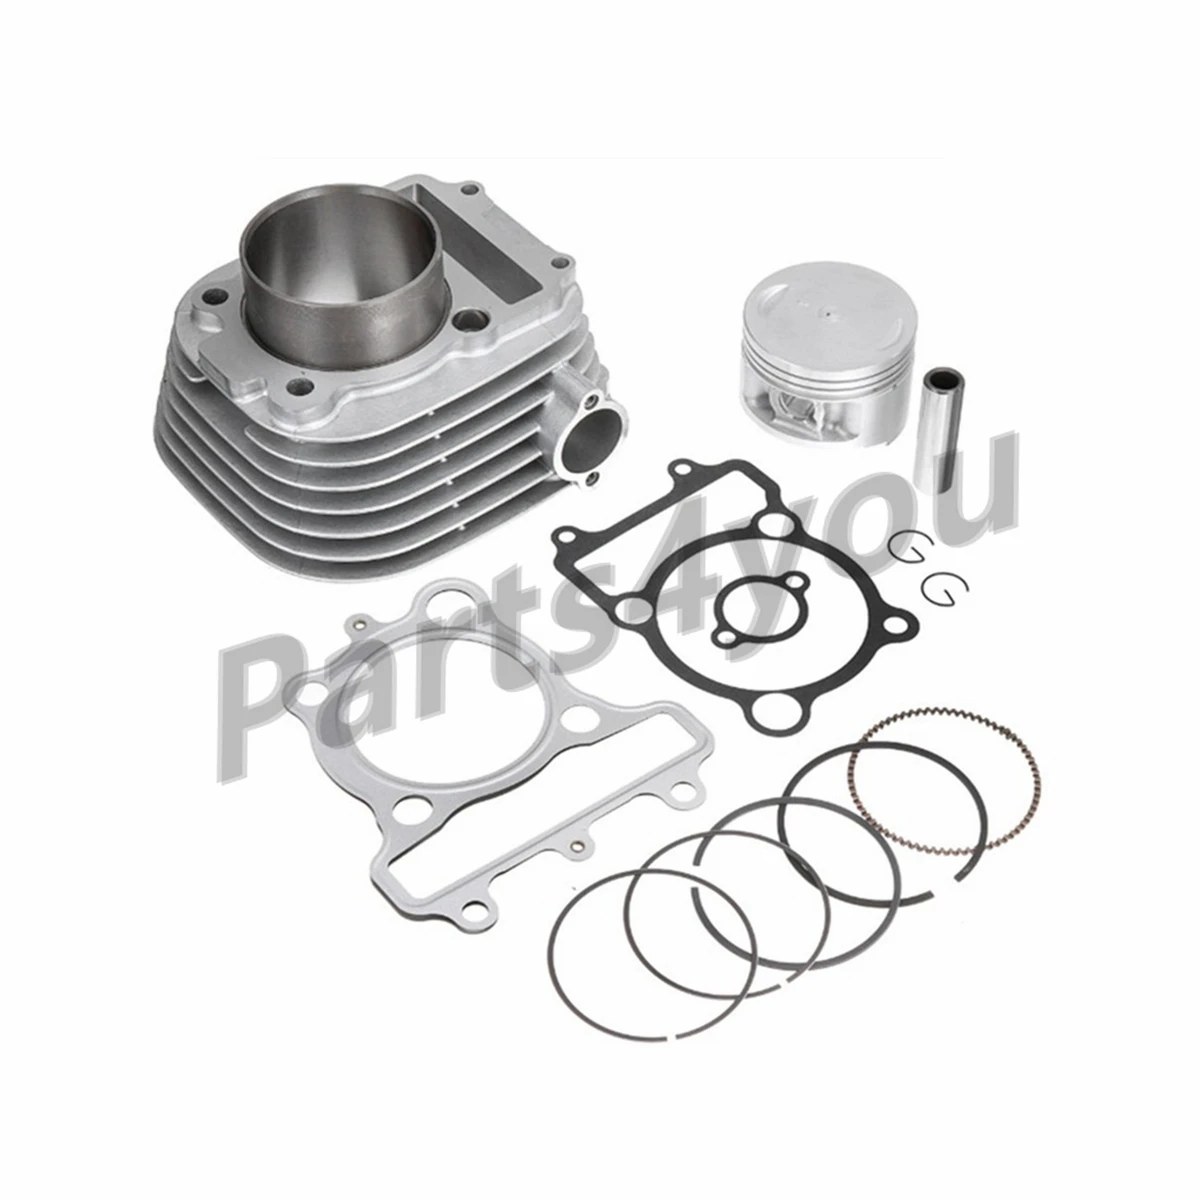 Cylinder Piston Rings Top End Kit Set Fit for Yamaha XT225 Serow 92-20 TTR225 99-04 TTR230 05-16 3RW-11310-00-00 4VW-11310-00-00